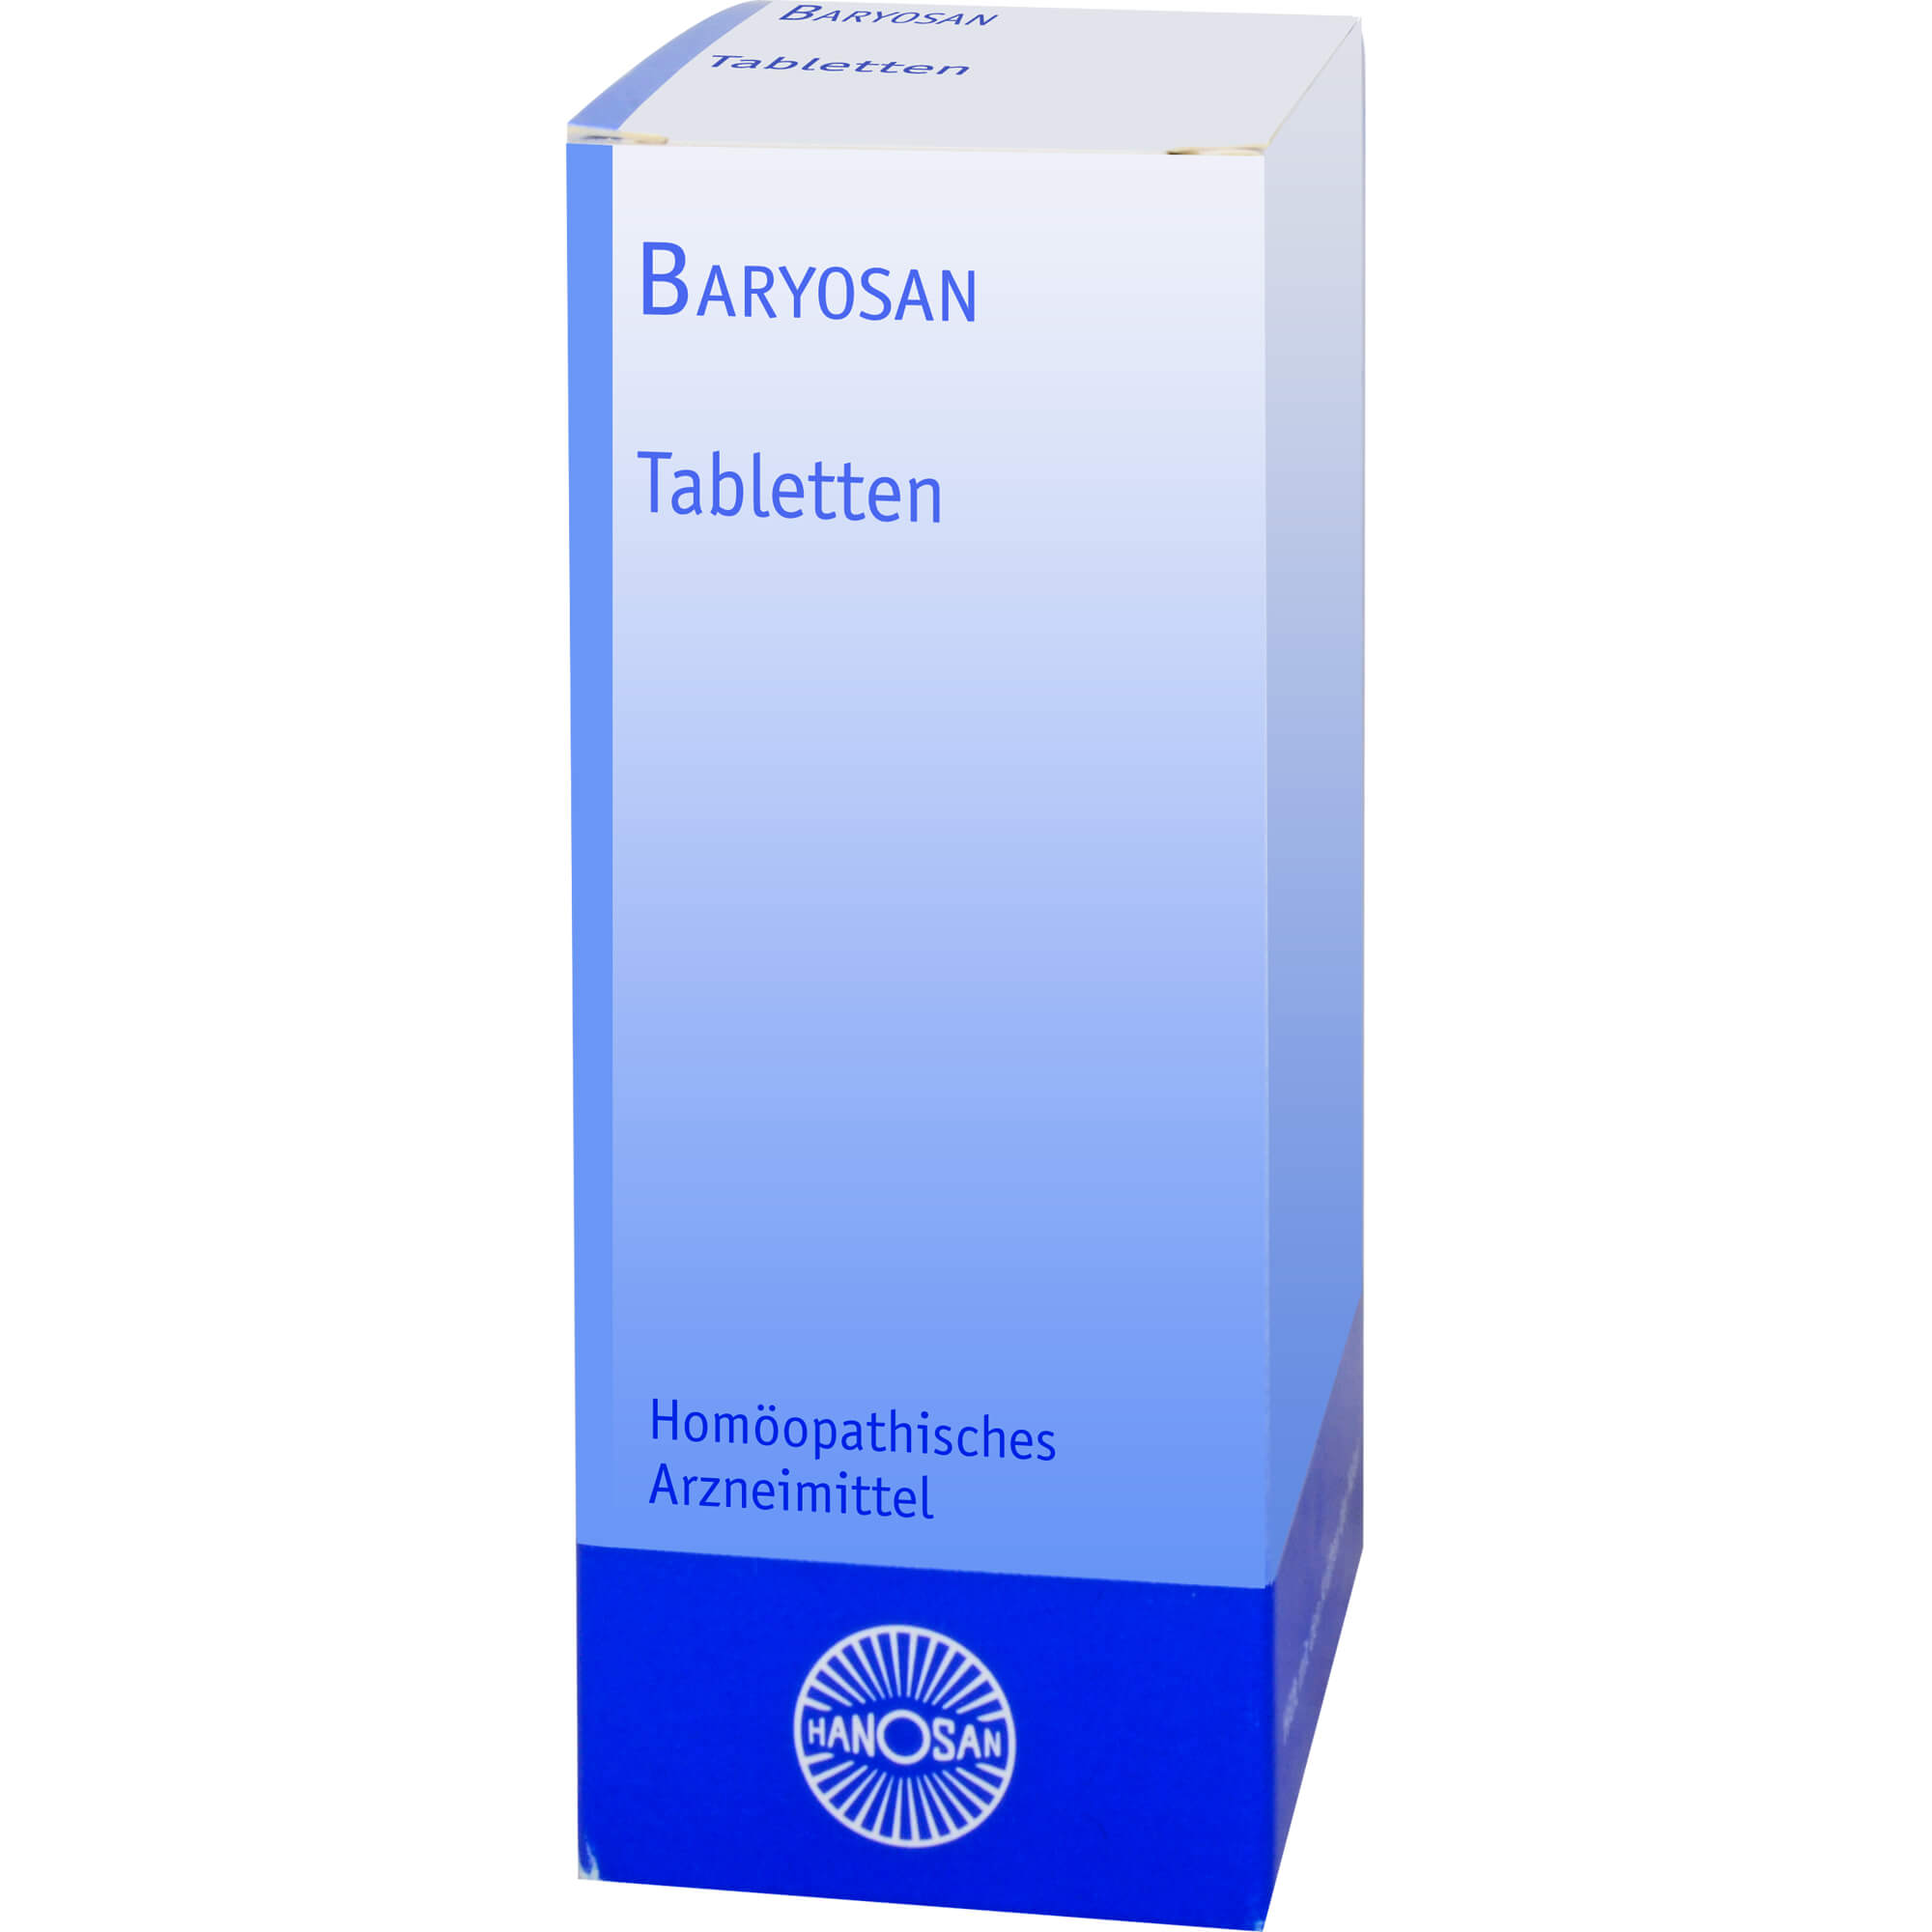 BARYOSAN Tabletten